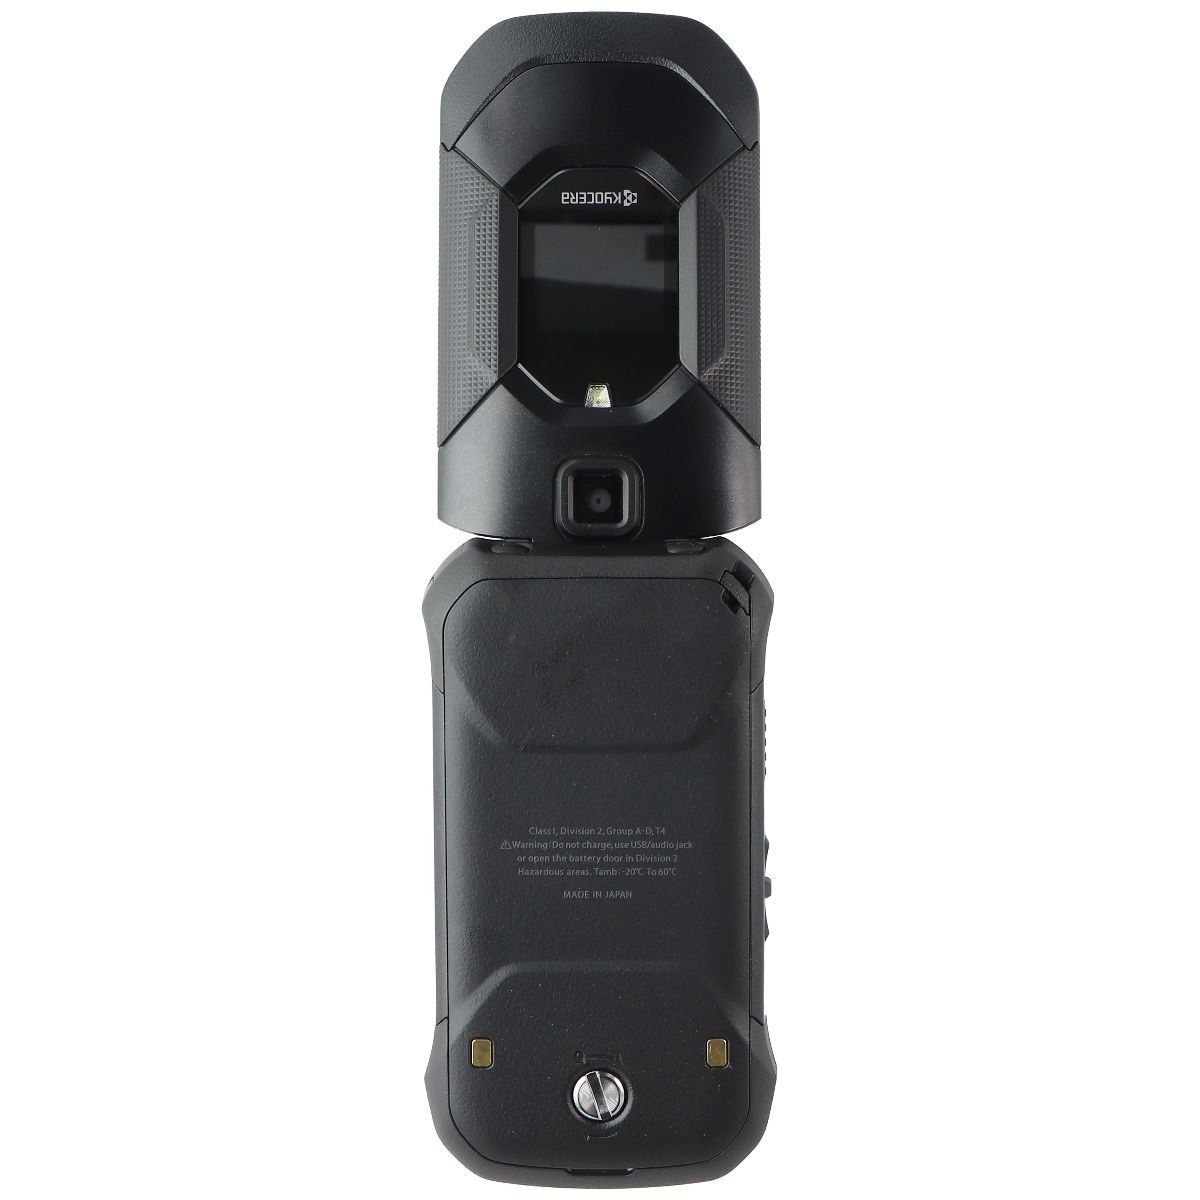 Kyocera DuraXA Equip (2.6-inch) Flip Phone (E4831) Unlocked - 16GB/Black (Refurbished)